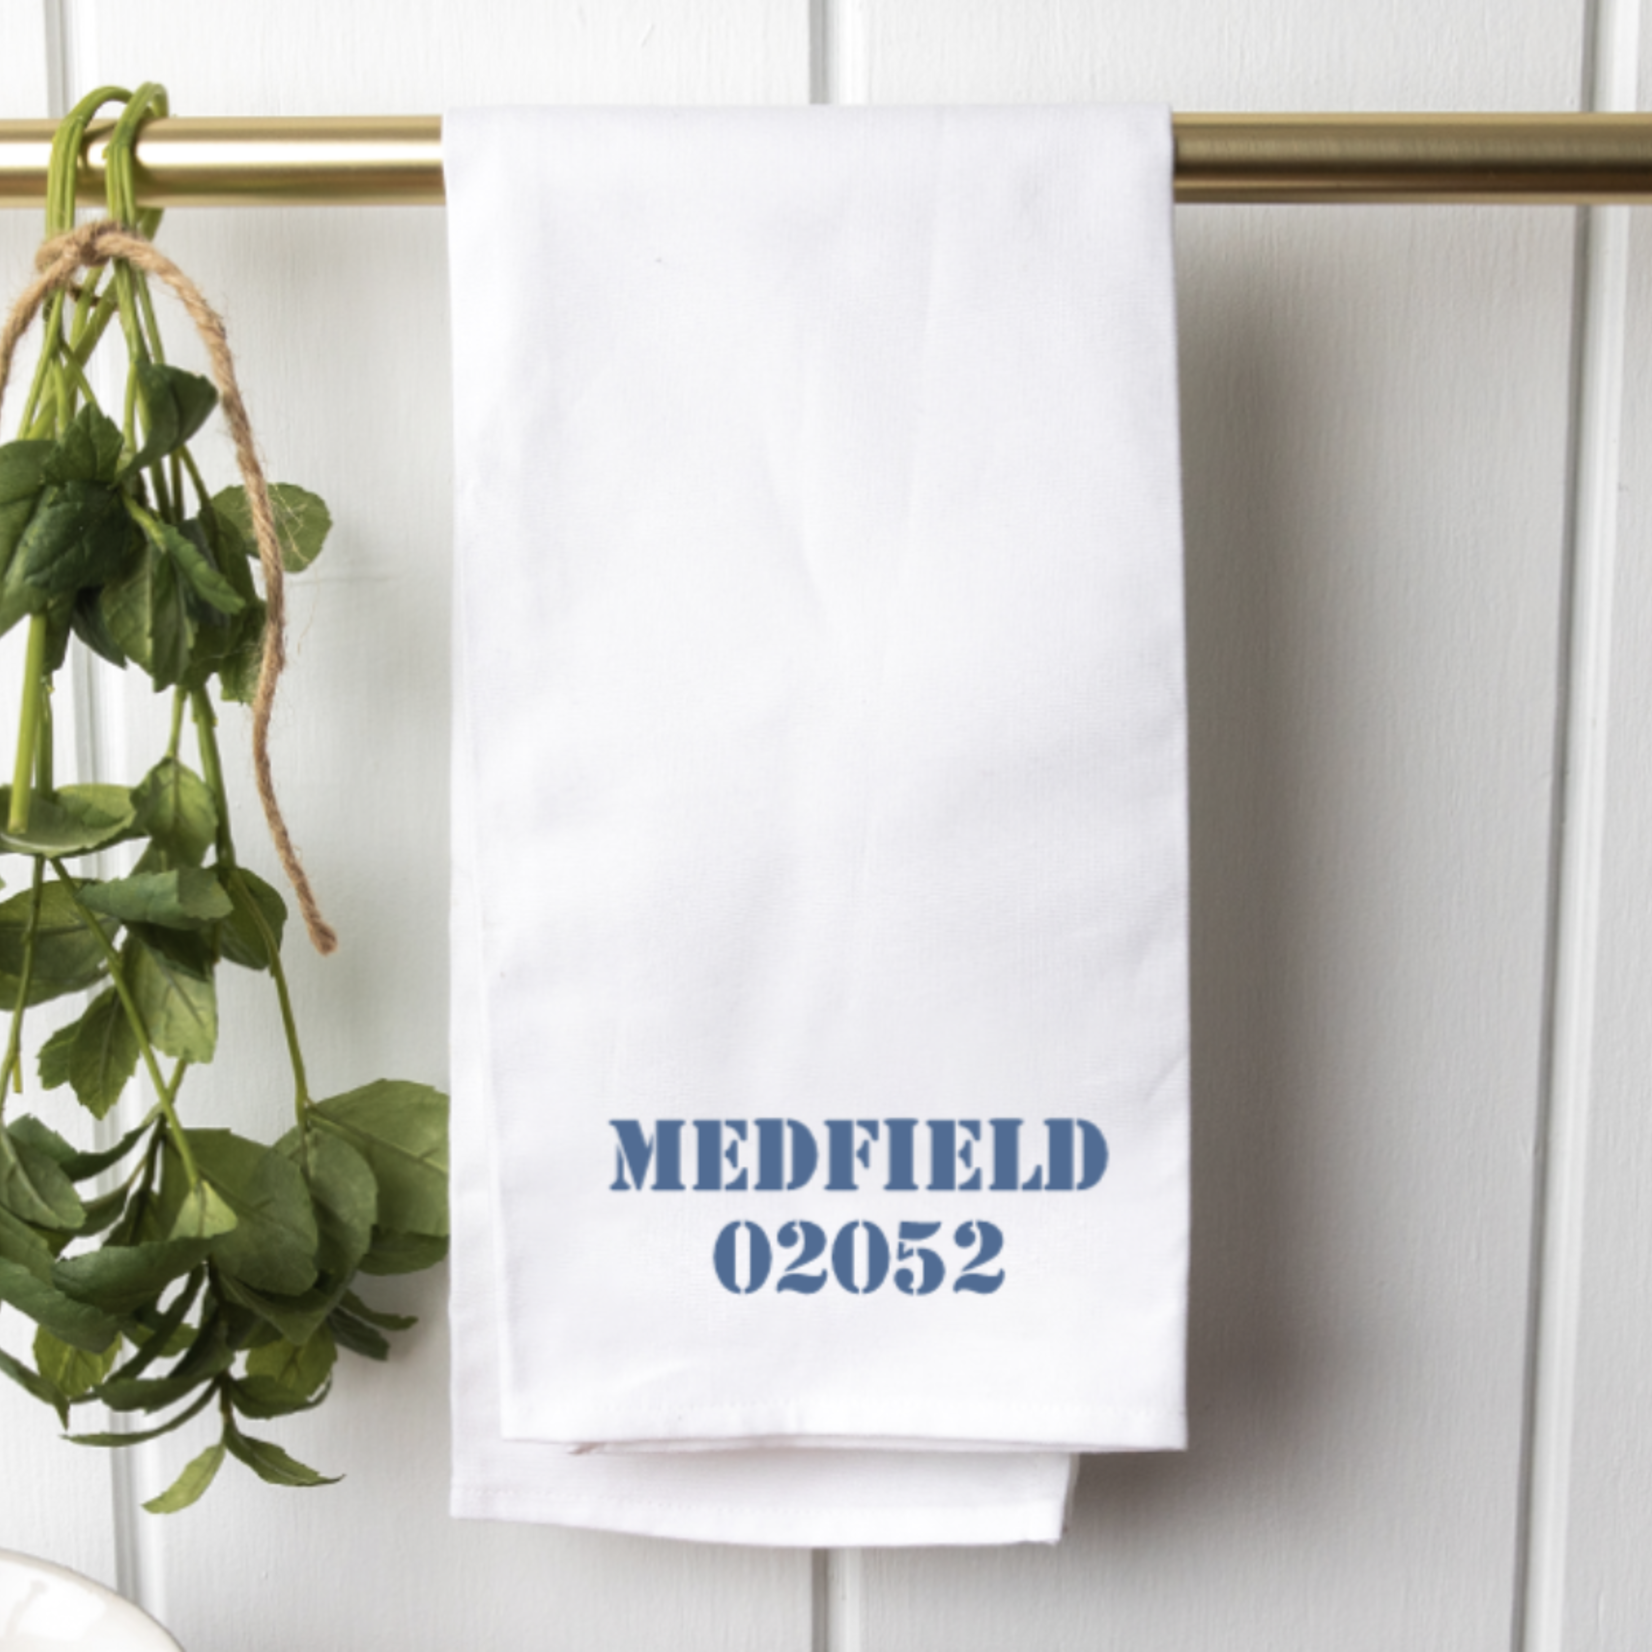 Rustic Marlin Rustic Marlin - Tea Towel - Medfield 02052